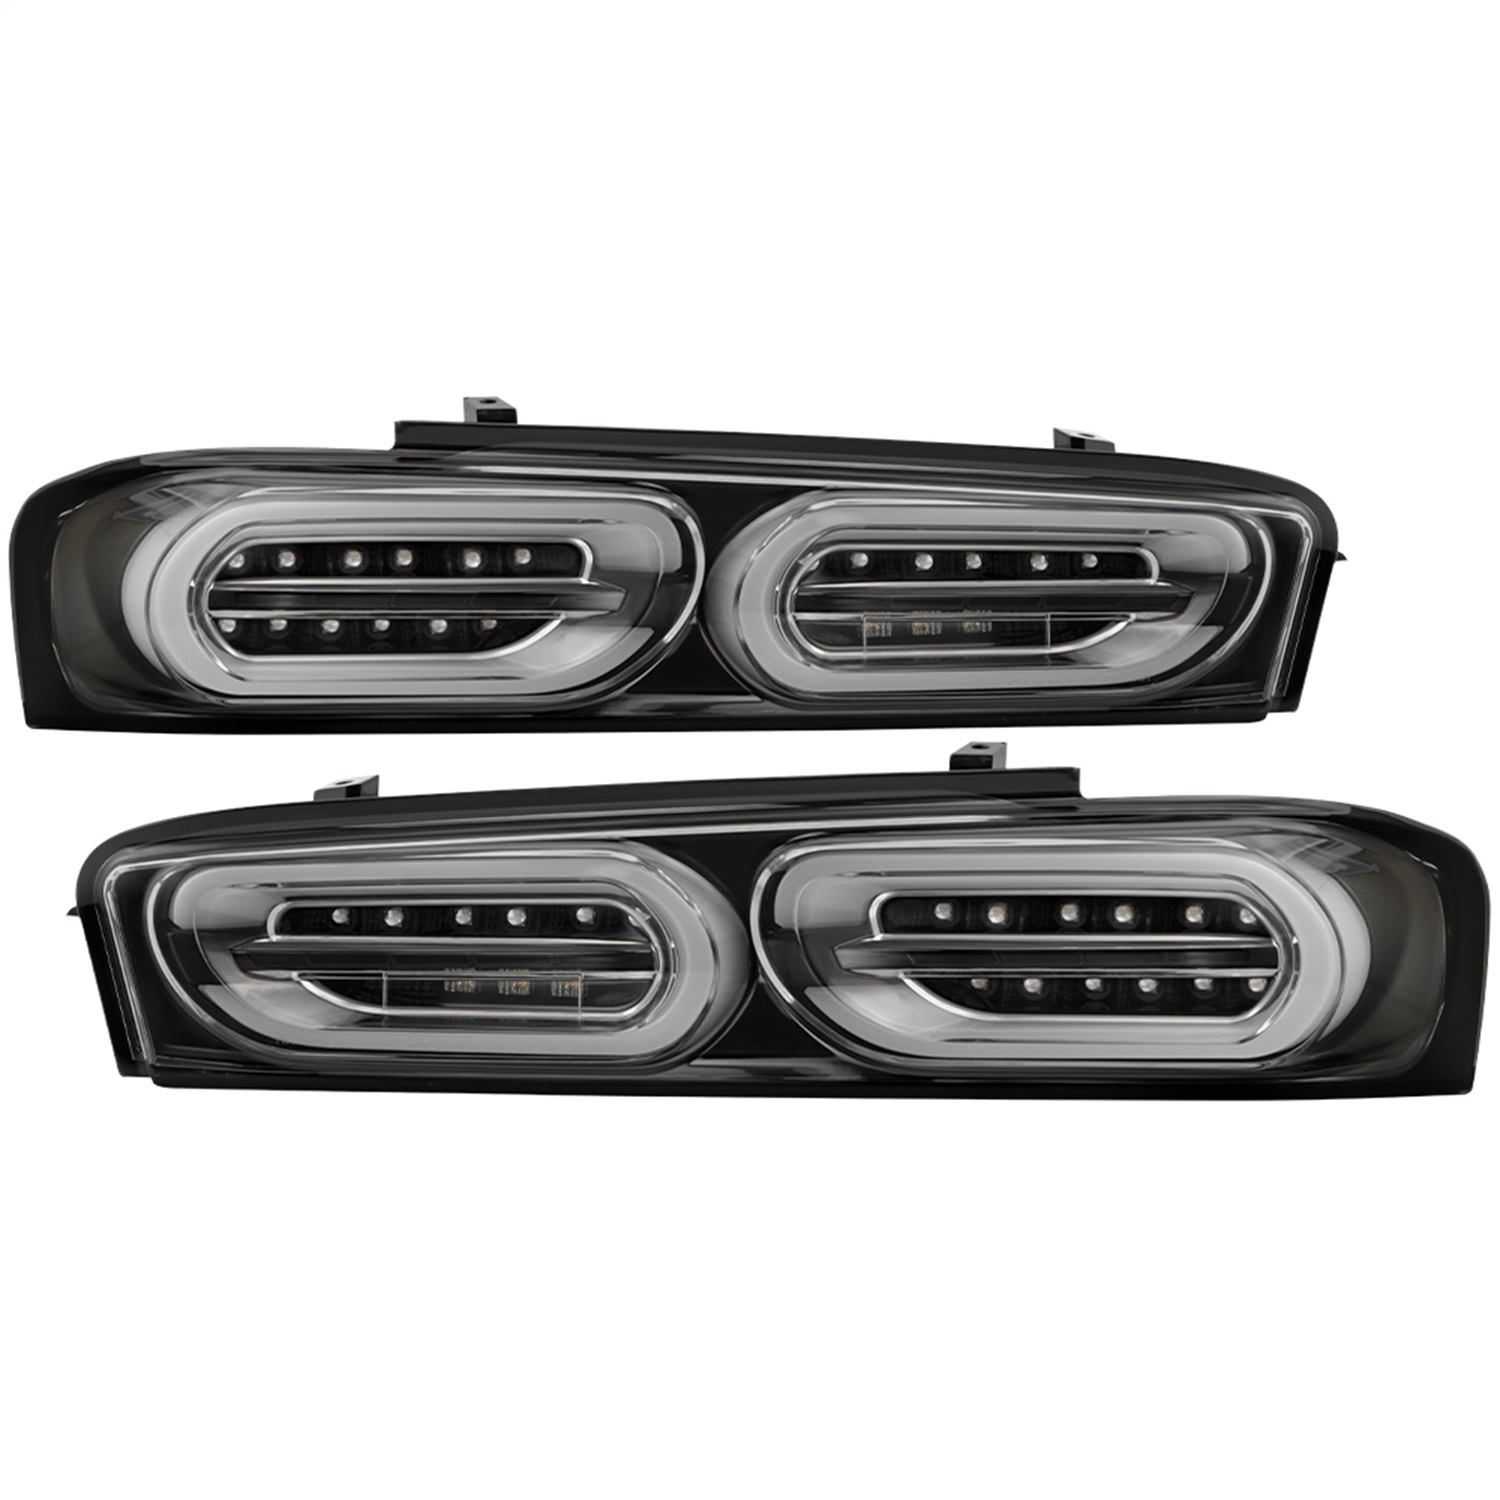 Spyder Auto 5087218 LED Tail Lights Fits 16-18 Camaro